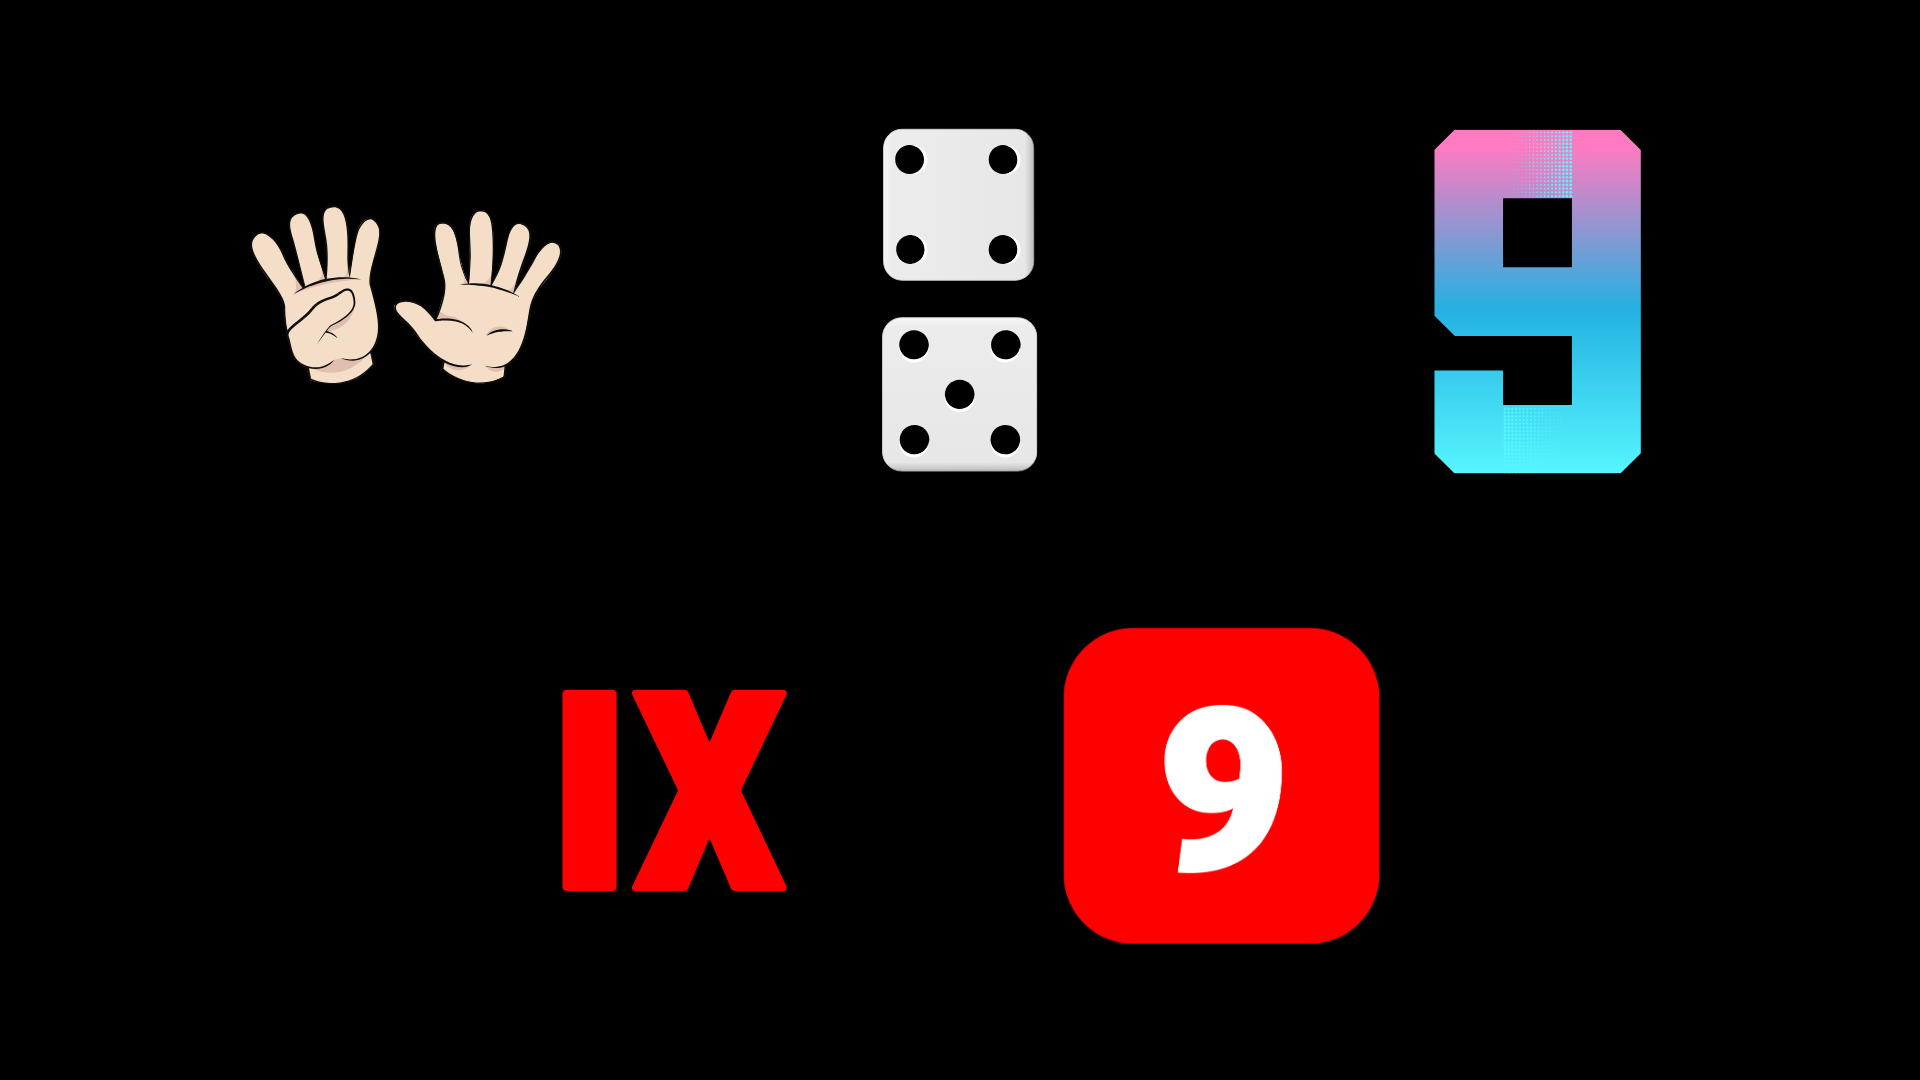 Symbols for 9